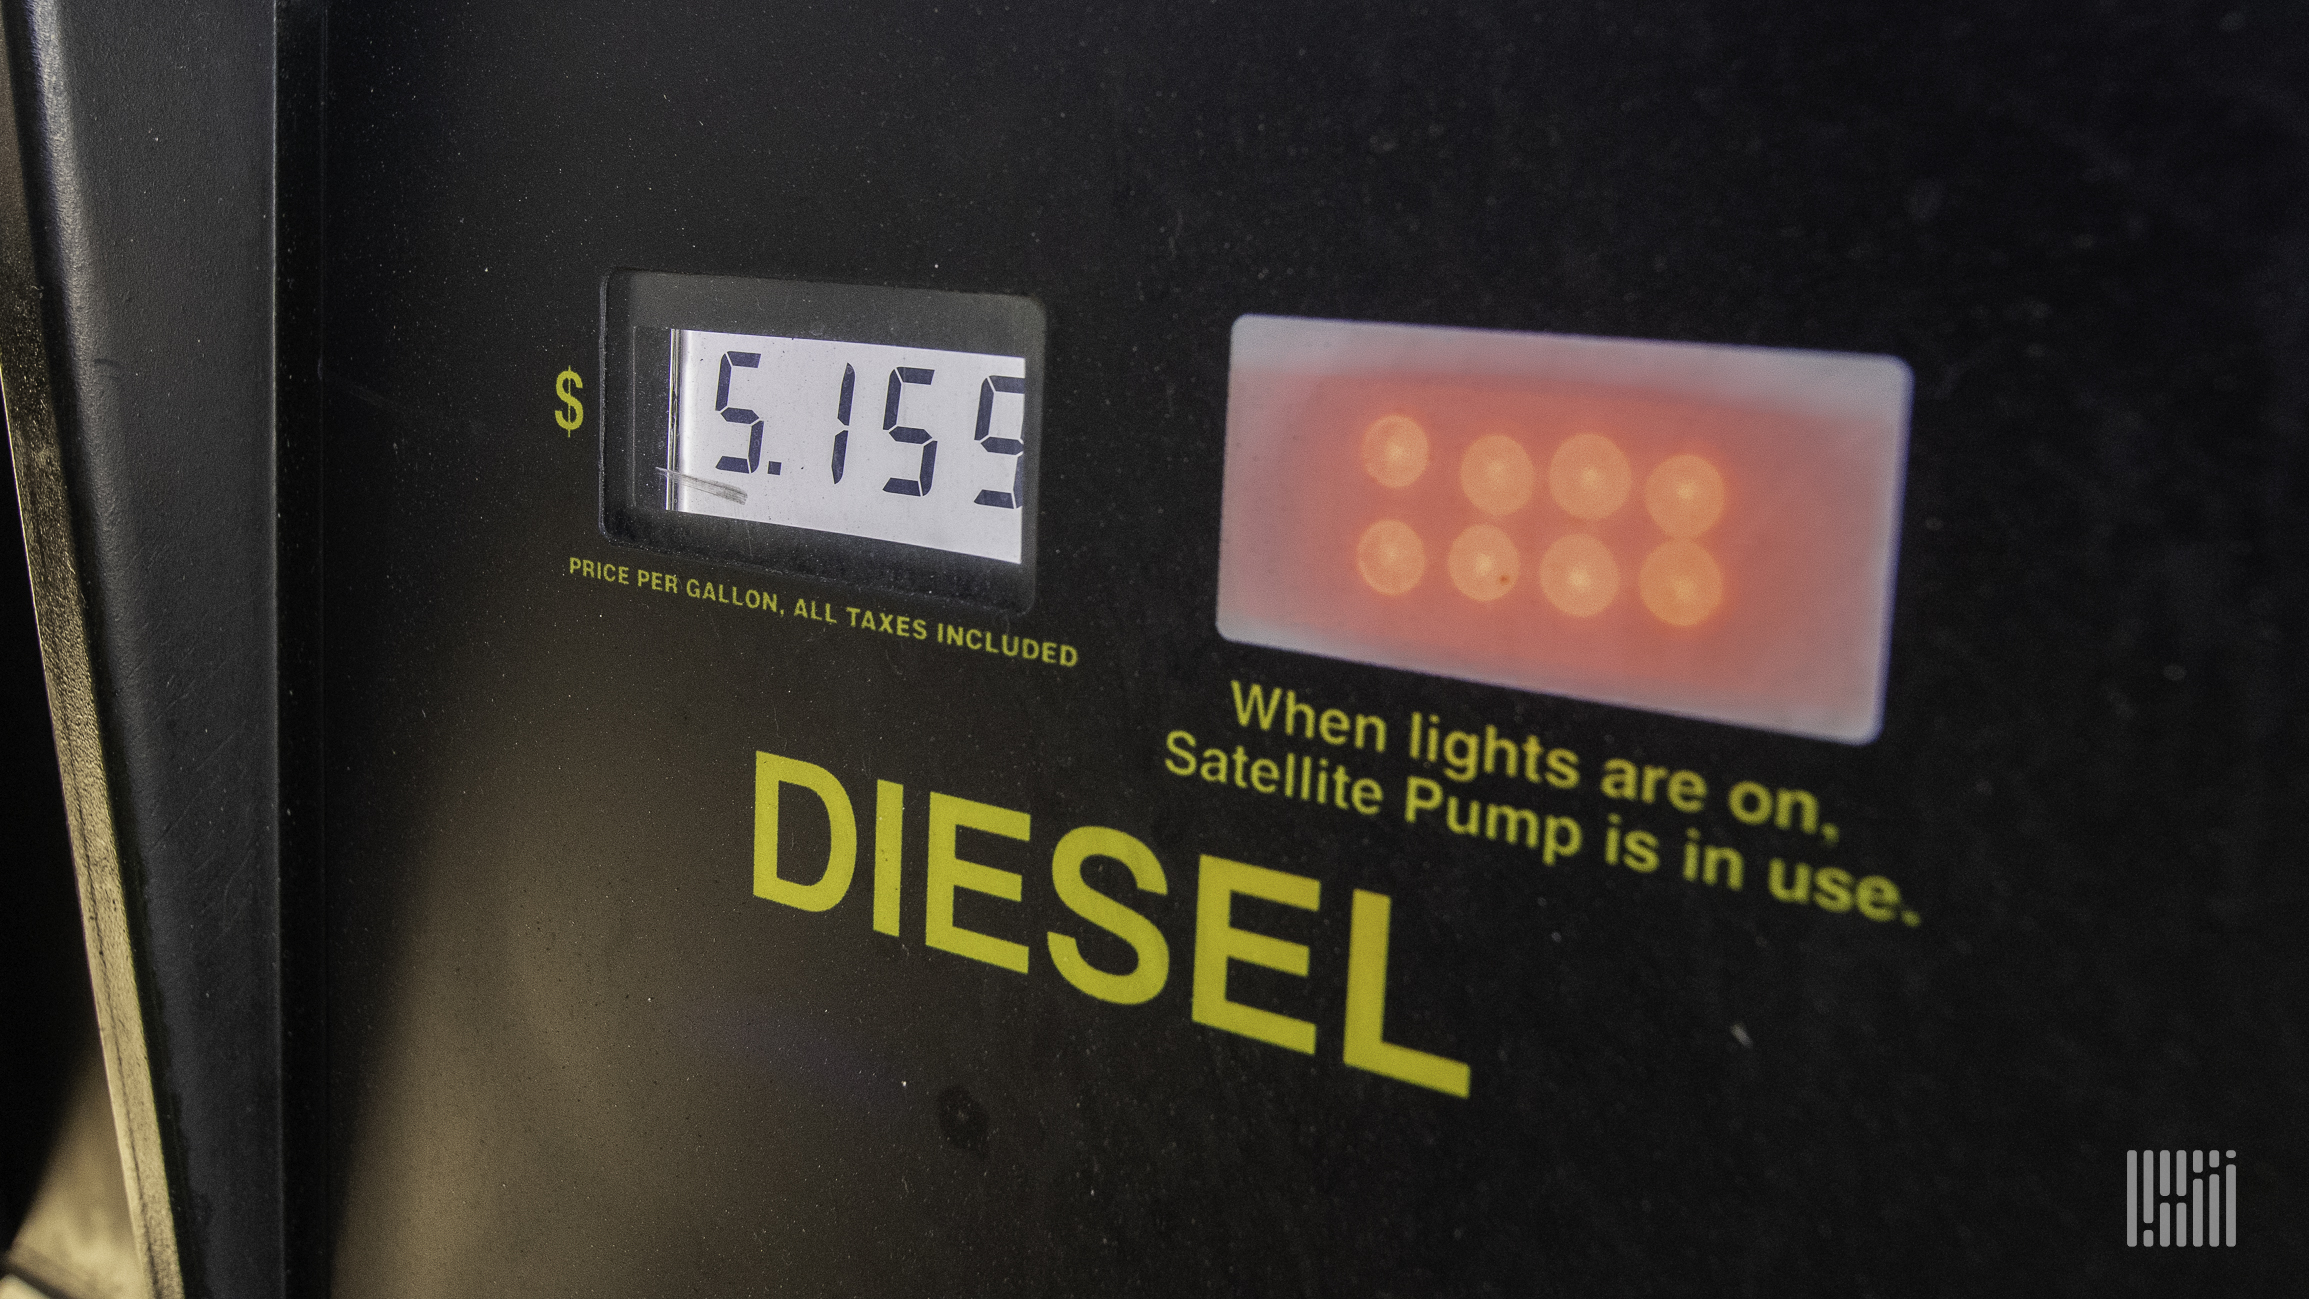 A fuel pump showing price of diesel